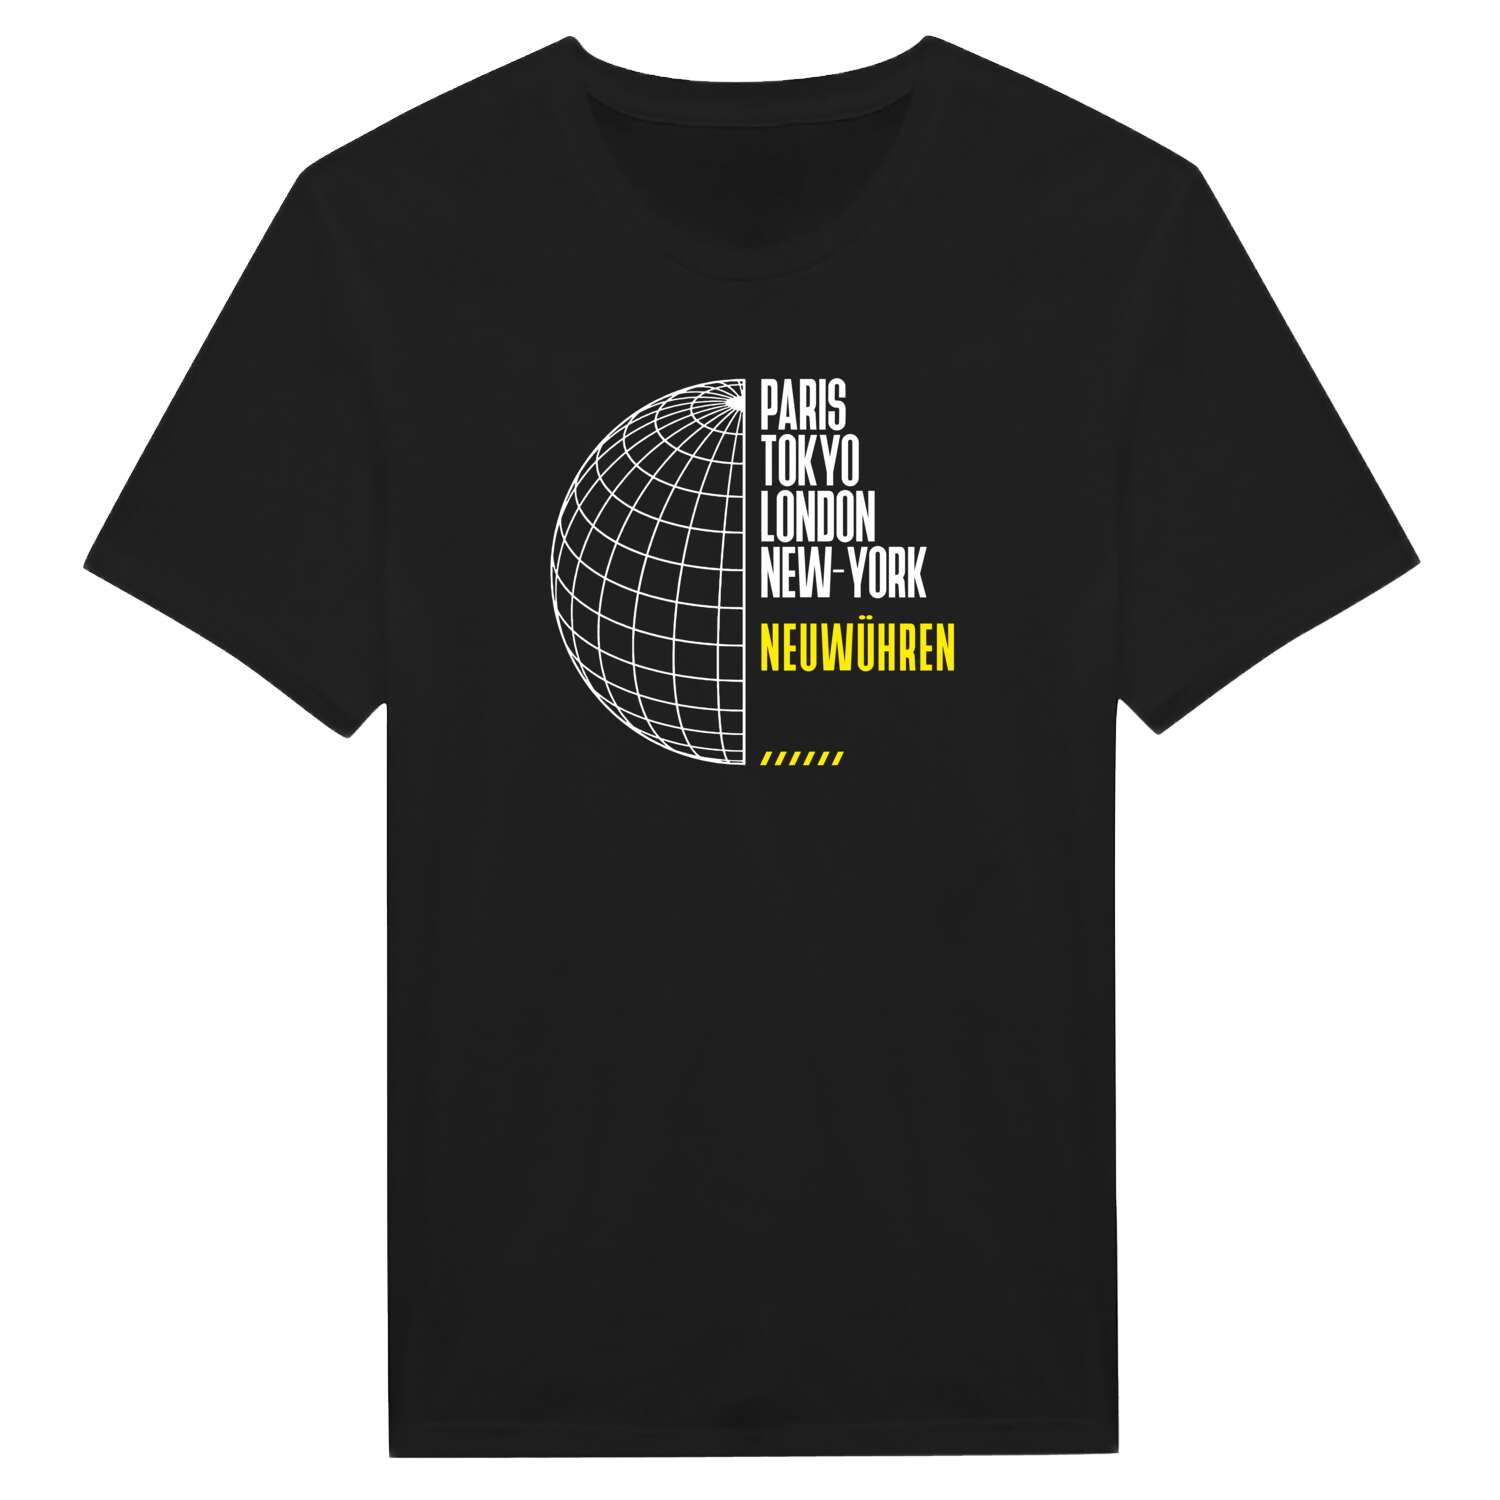 Neuwühren T-Shirt »Paris Tokyo London«